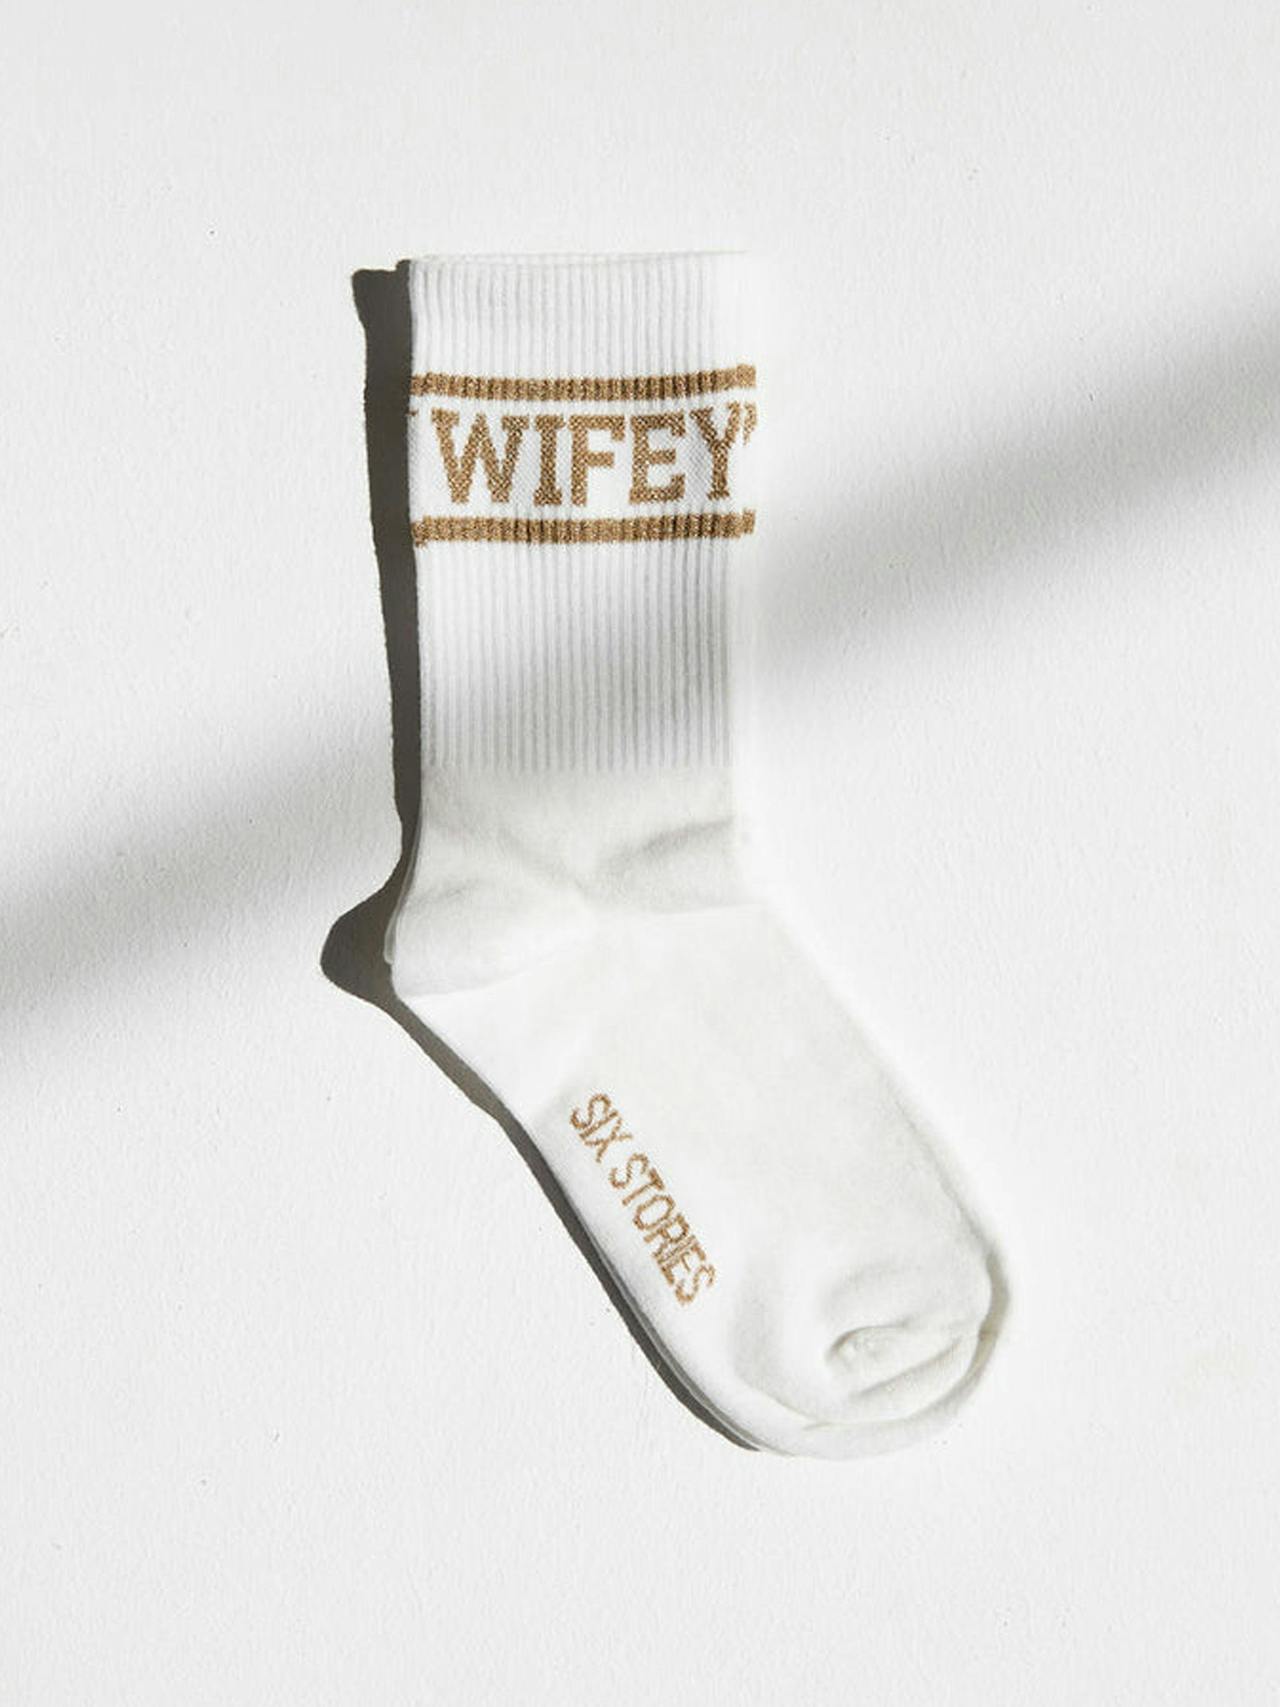 Wifey socks